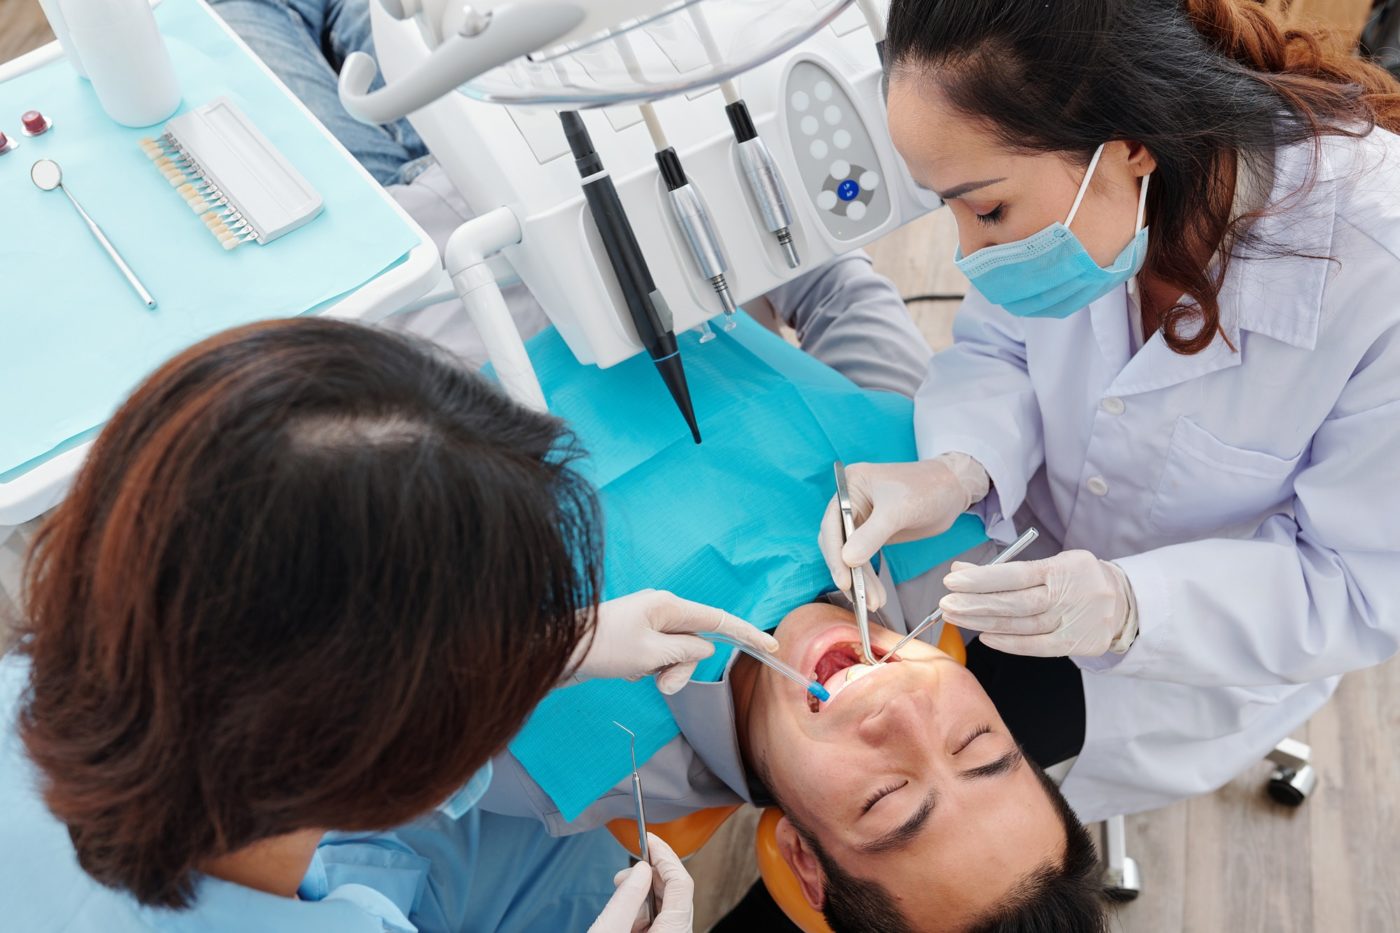 Treating teeth of patient